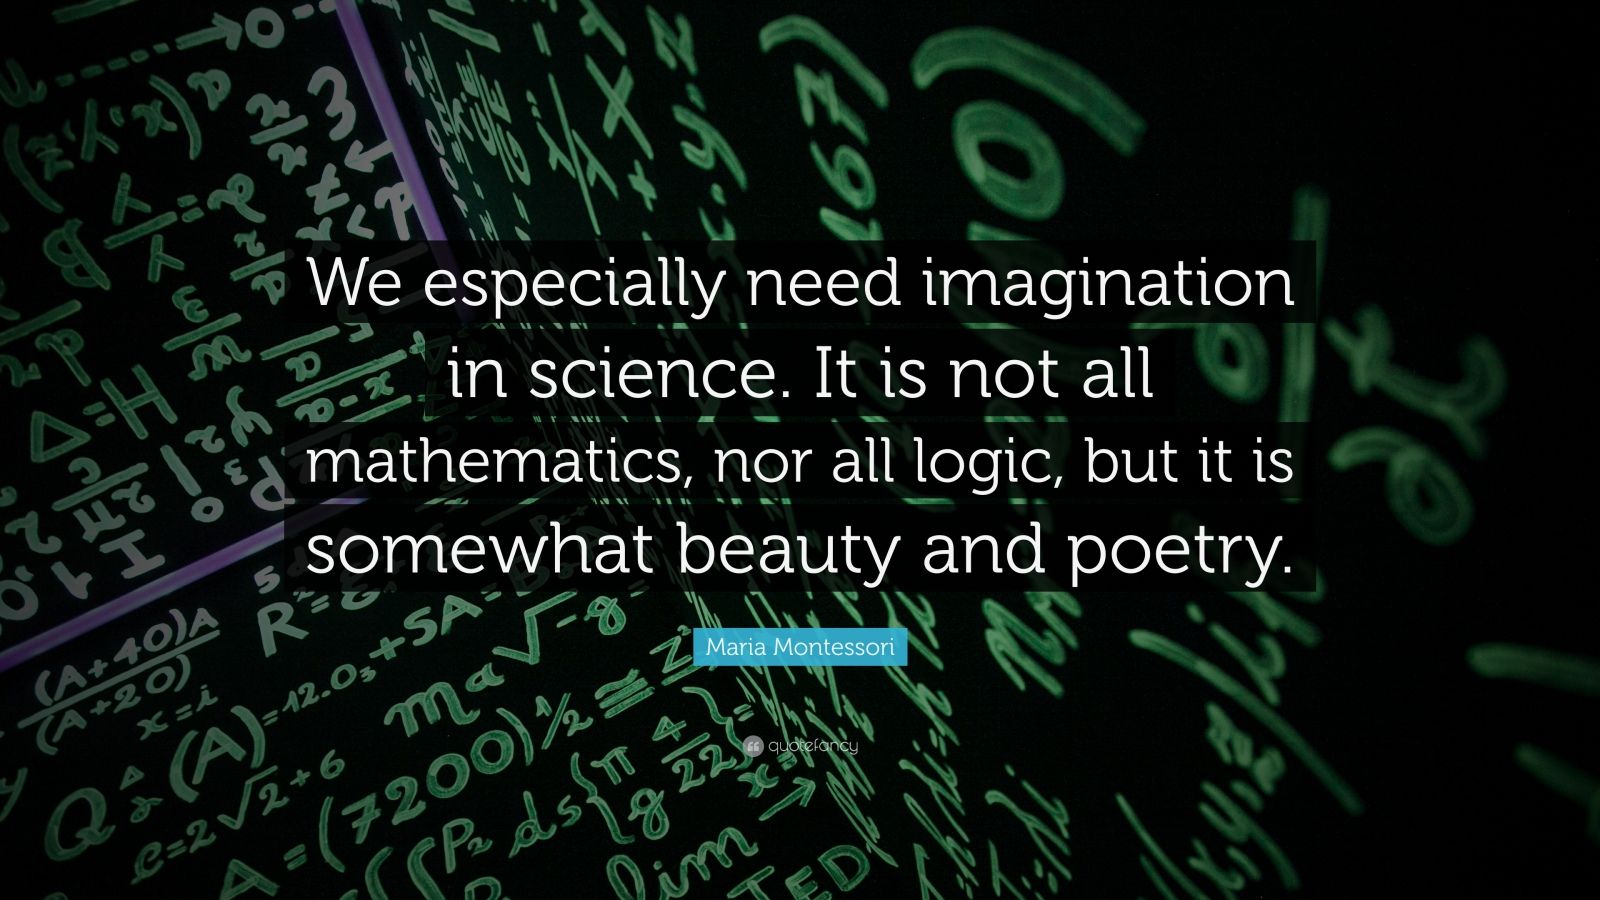 Maria Montessori Quote: “We especially need imagination in science. It